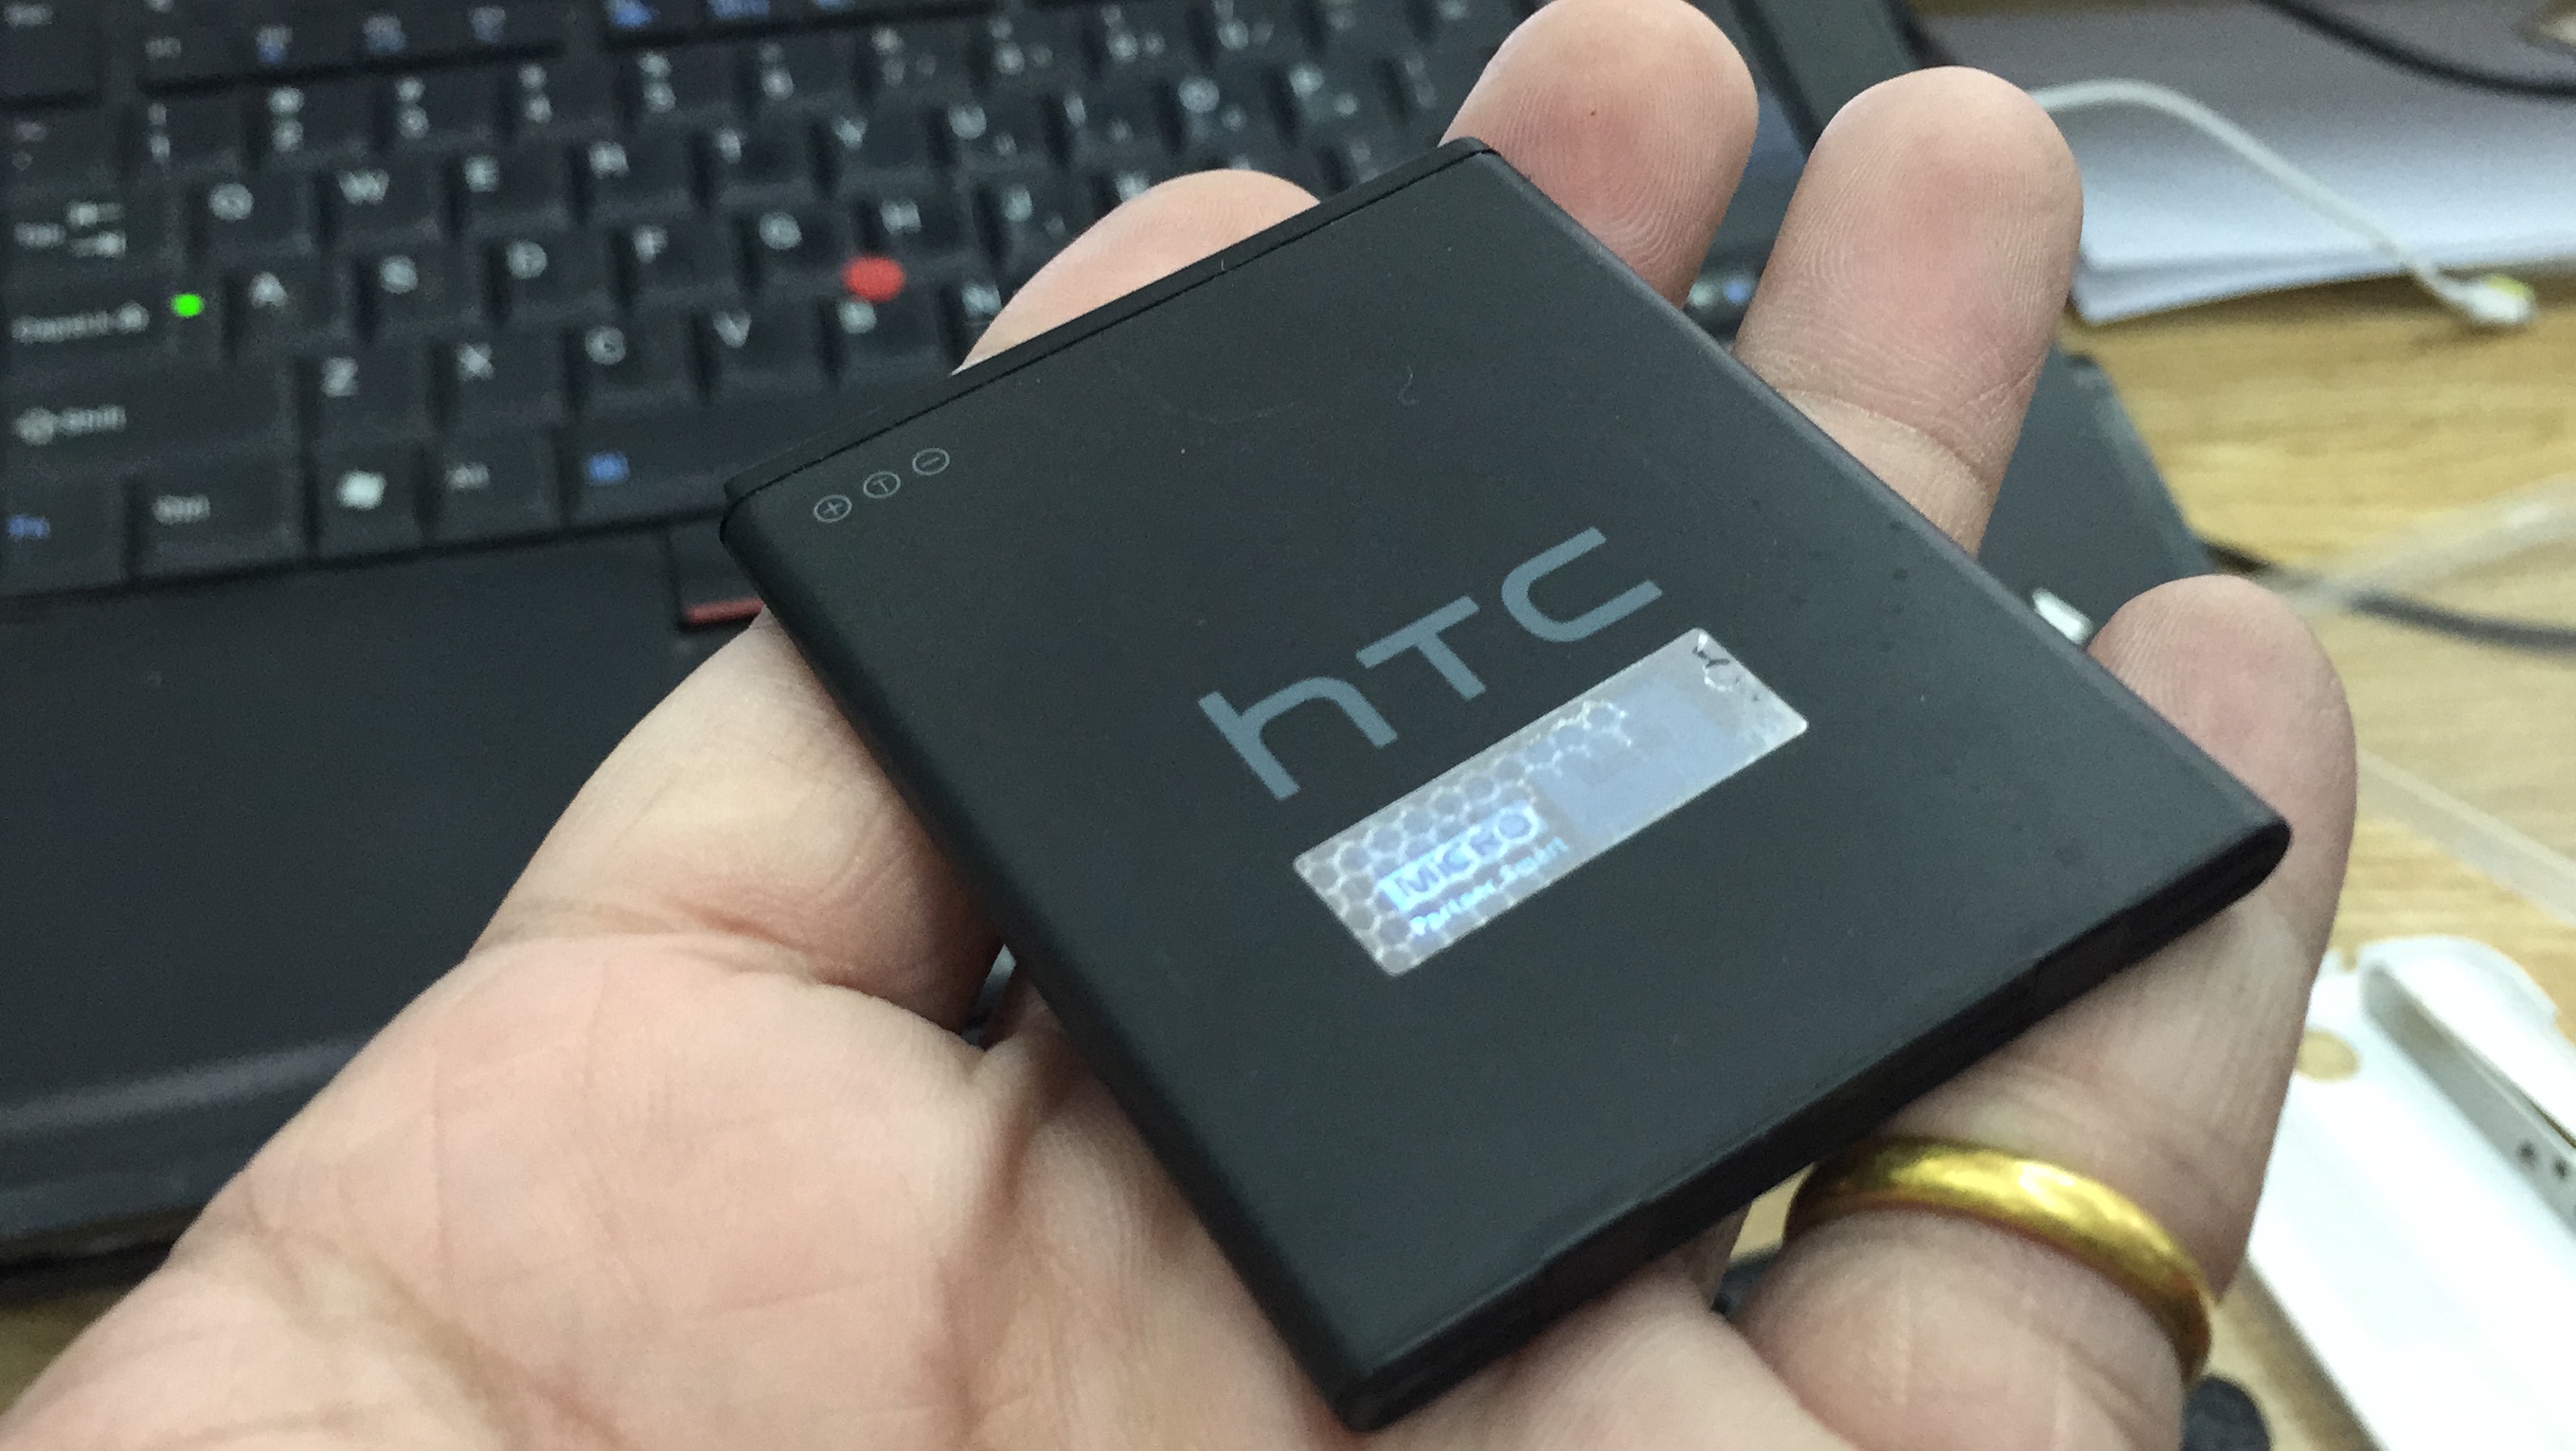 Pin HTC Desire 310 , Pin HTC Desire 310 Dual Sim